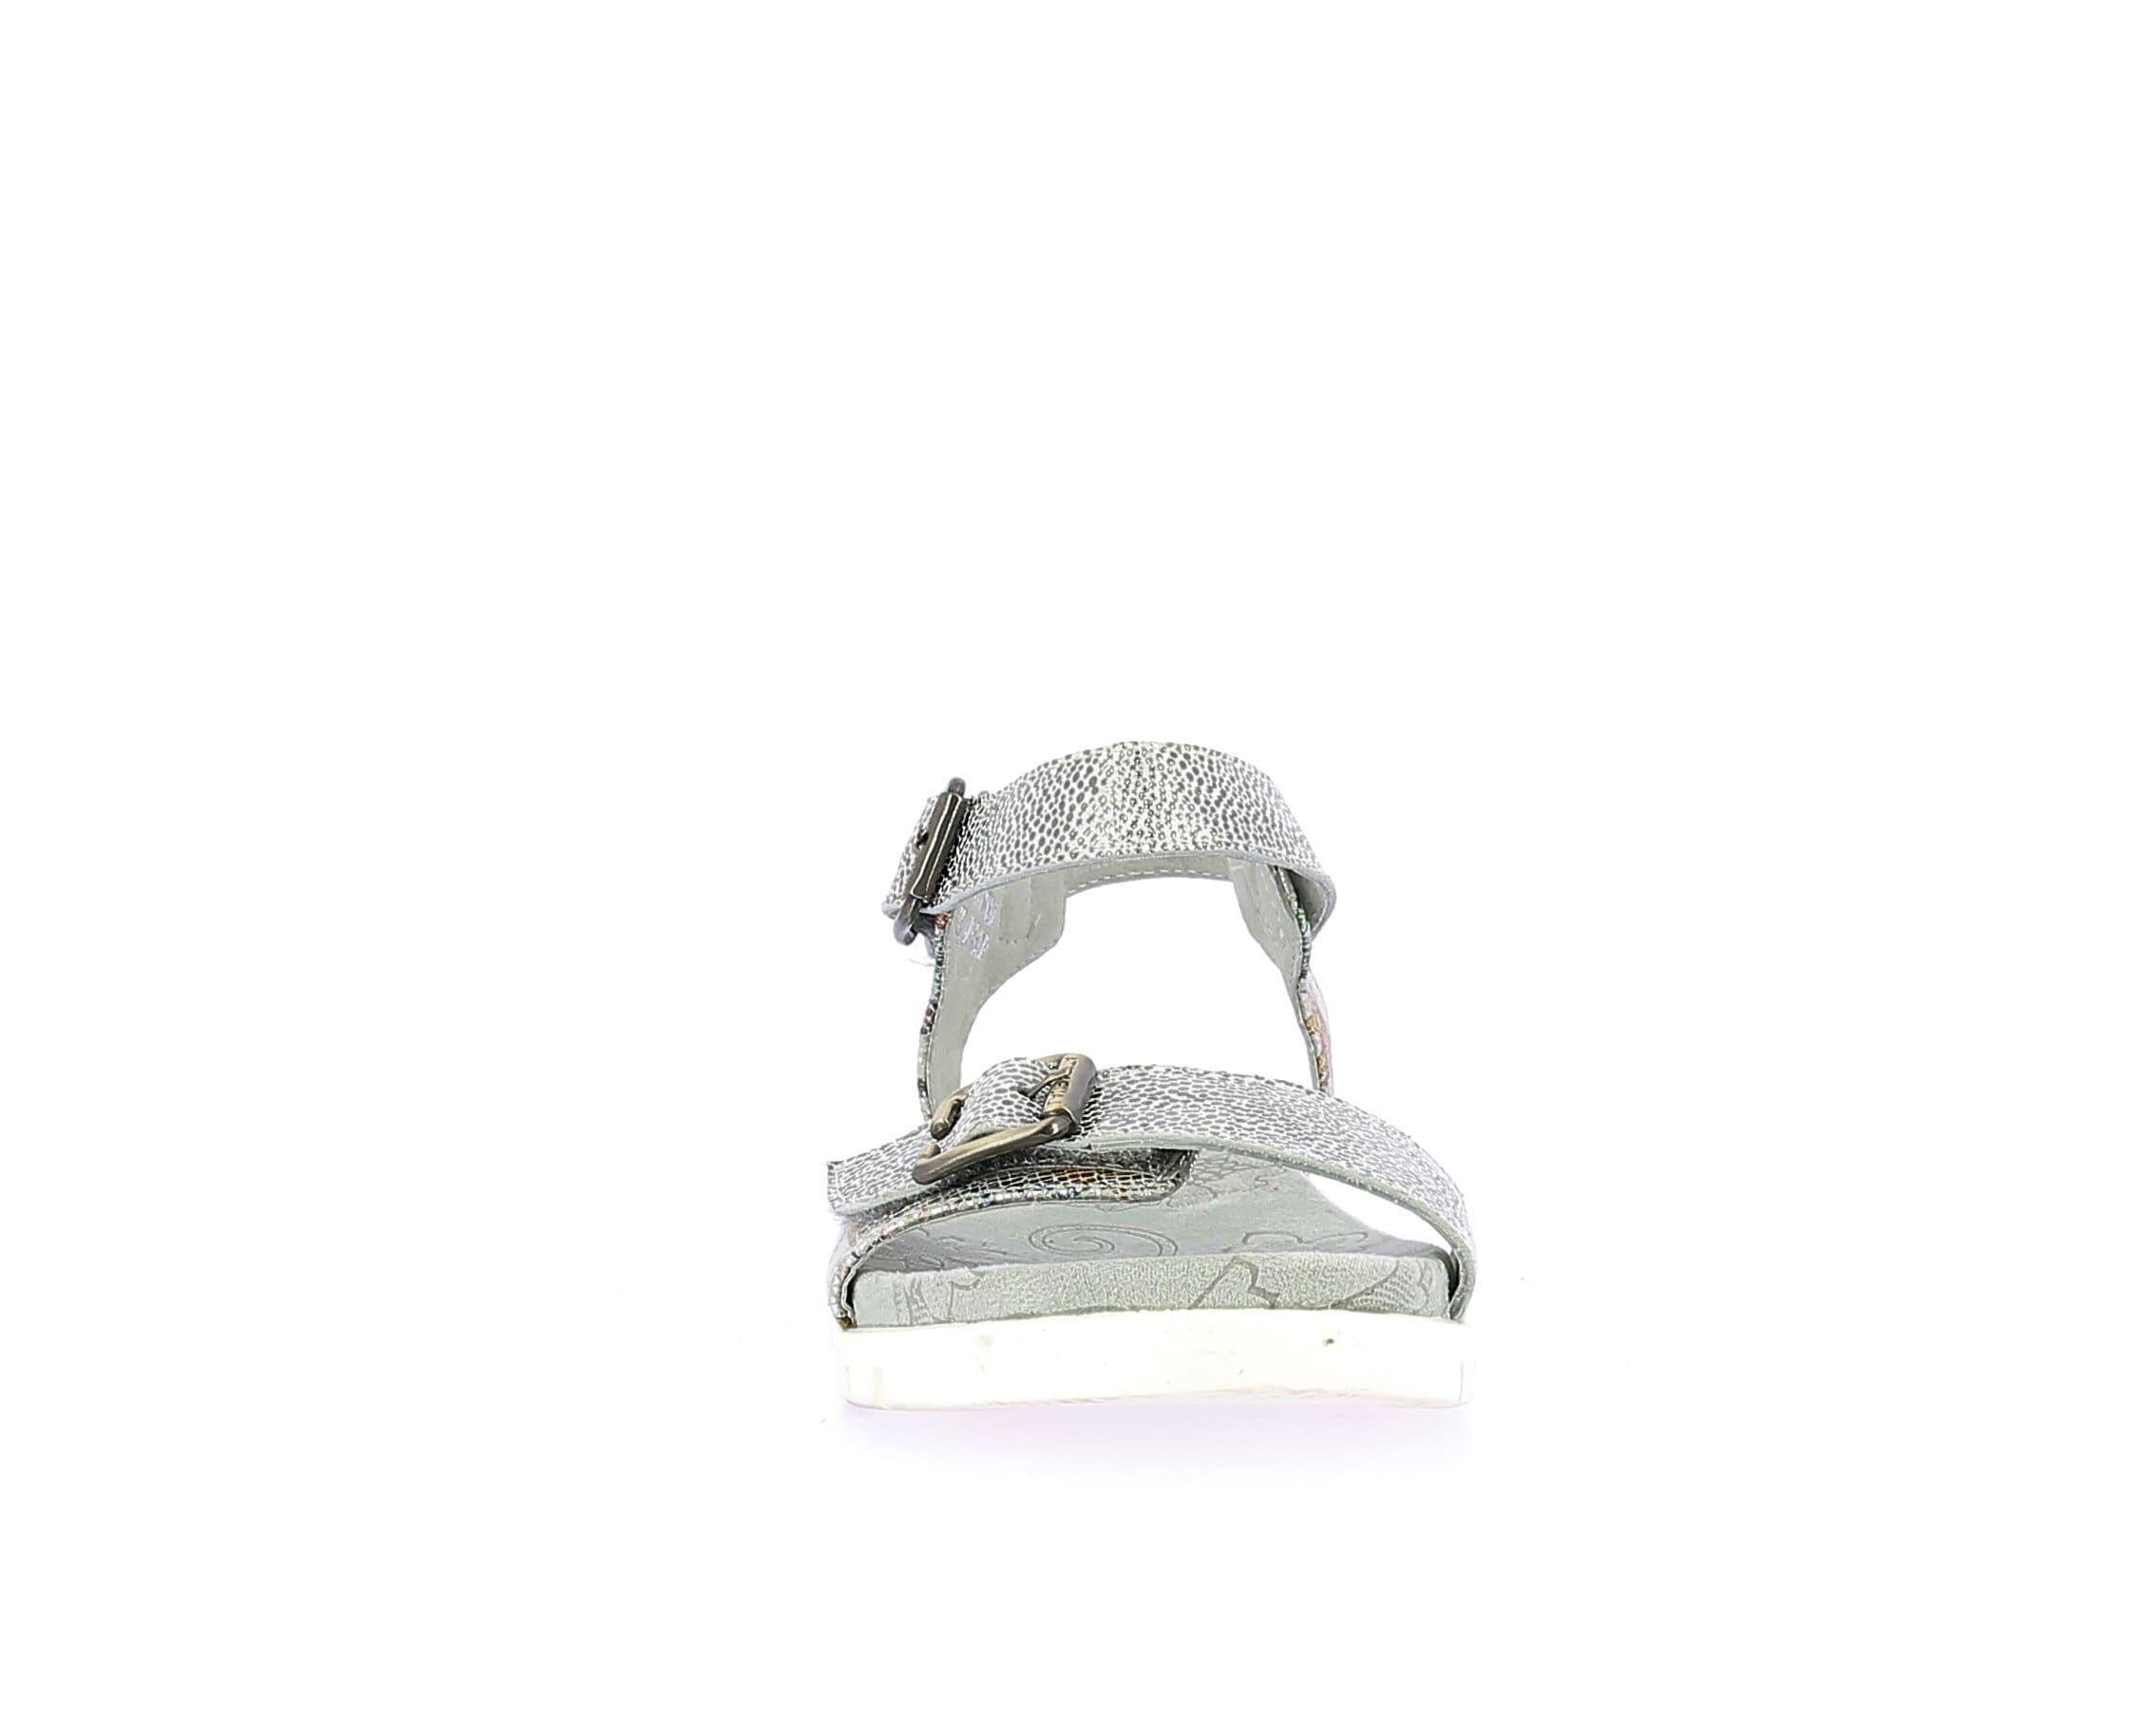 Chaussures DOCBBYO 03 - Sandale